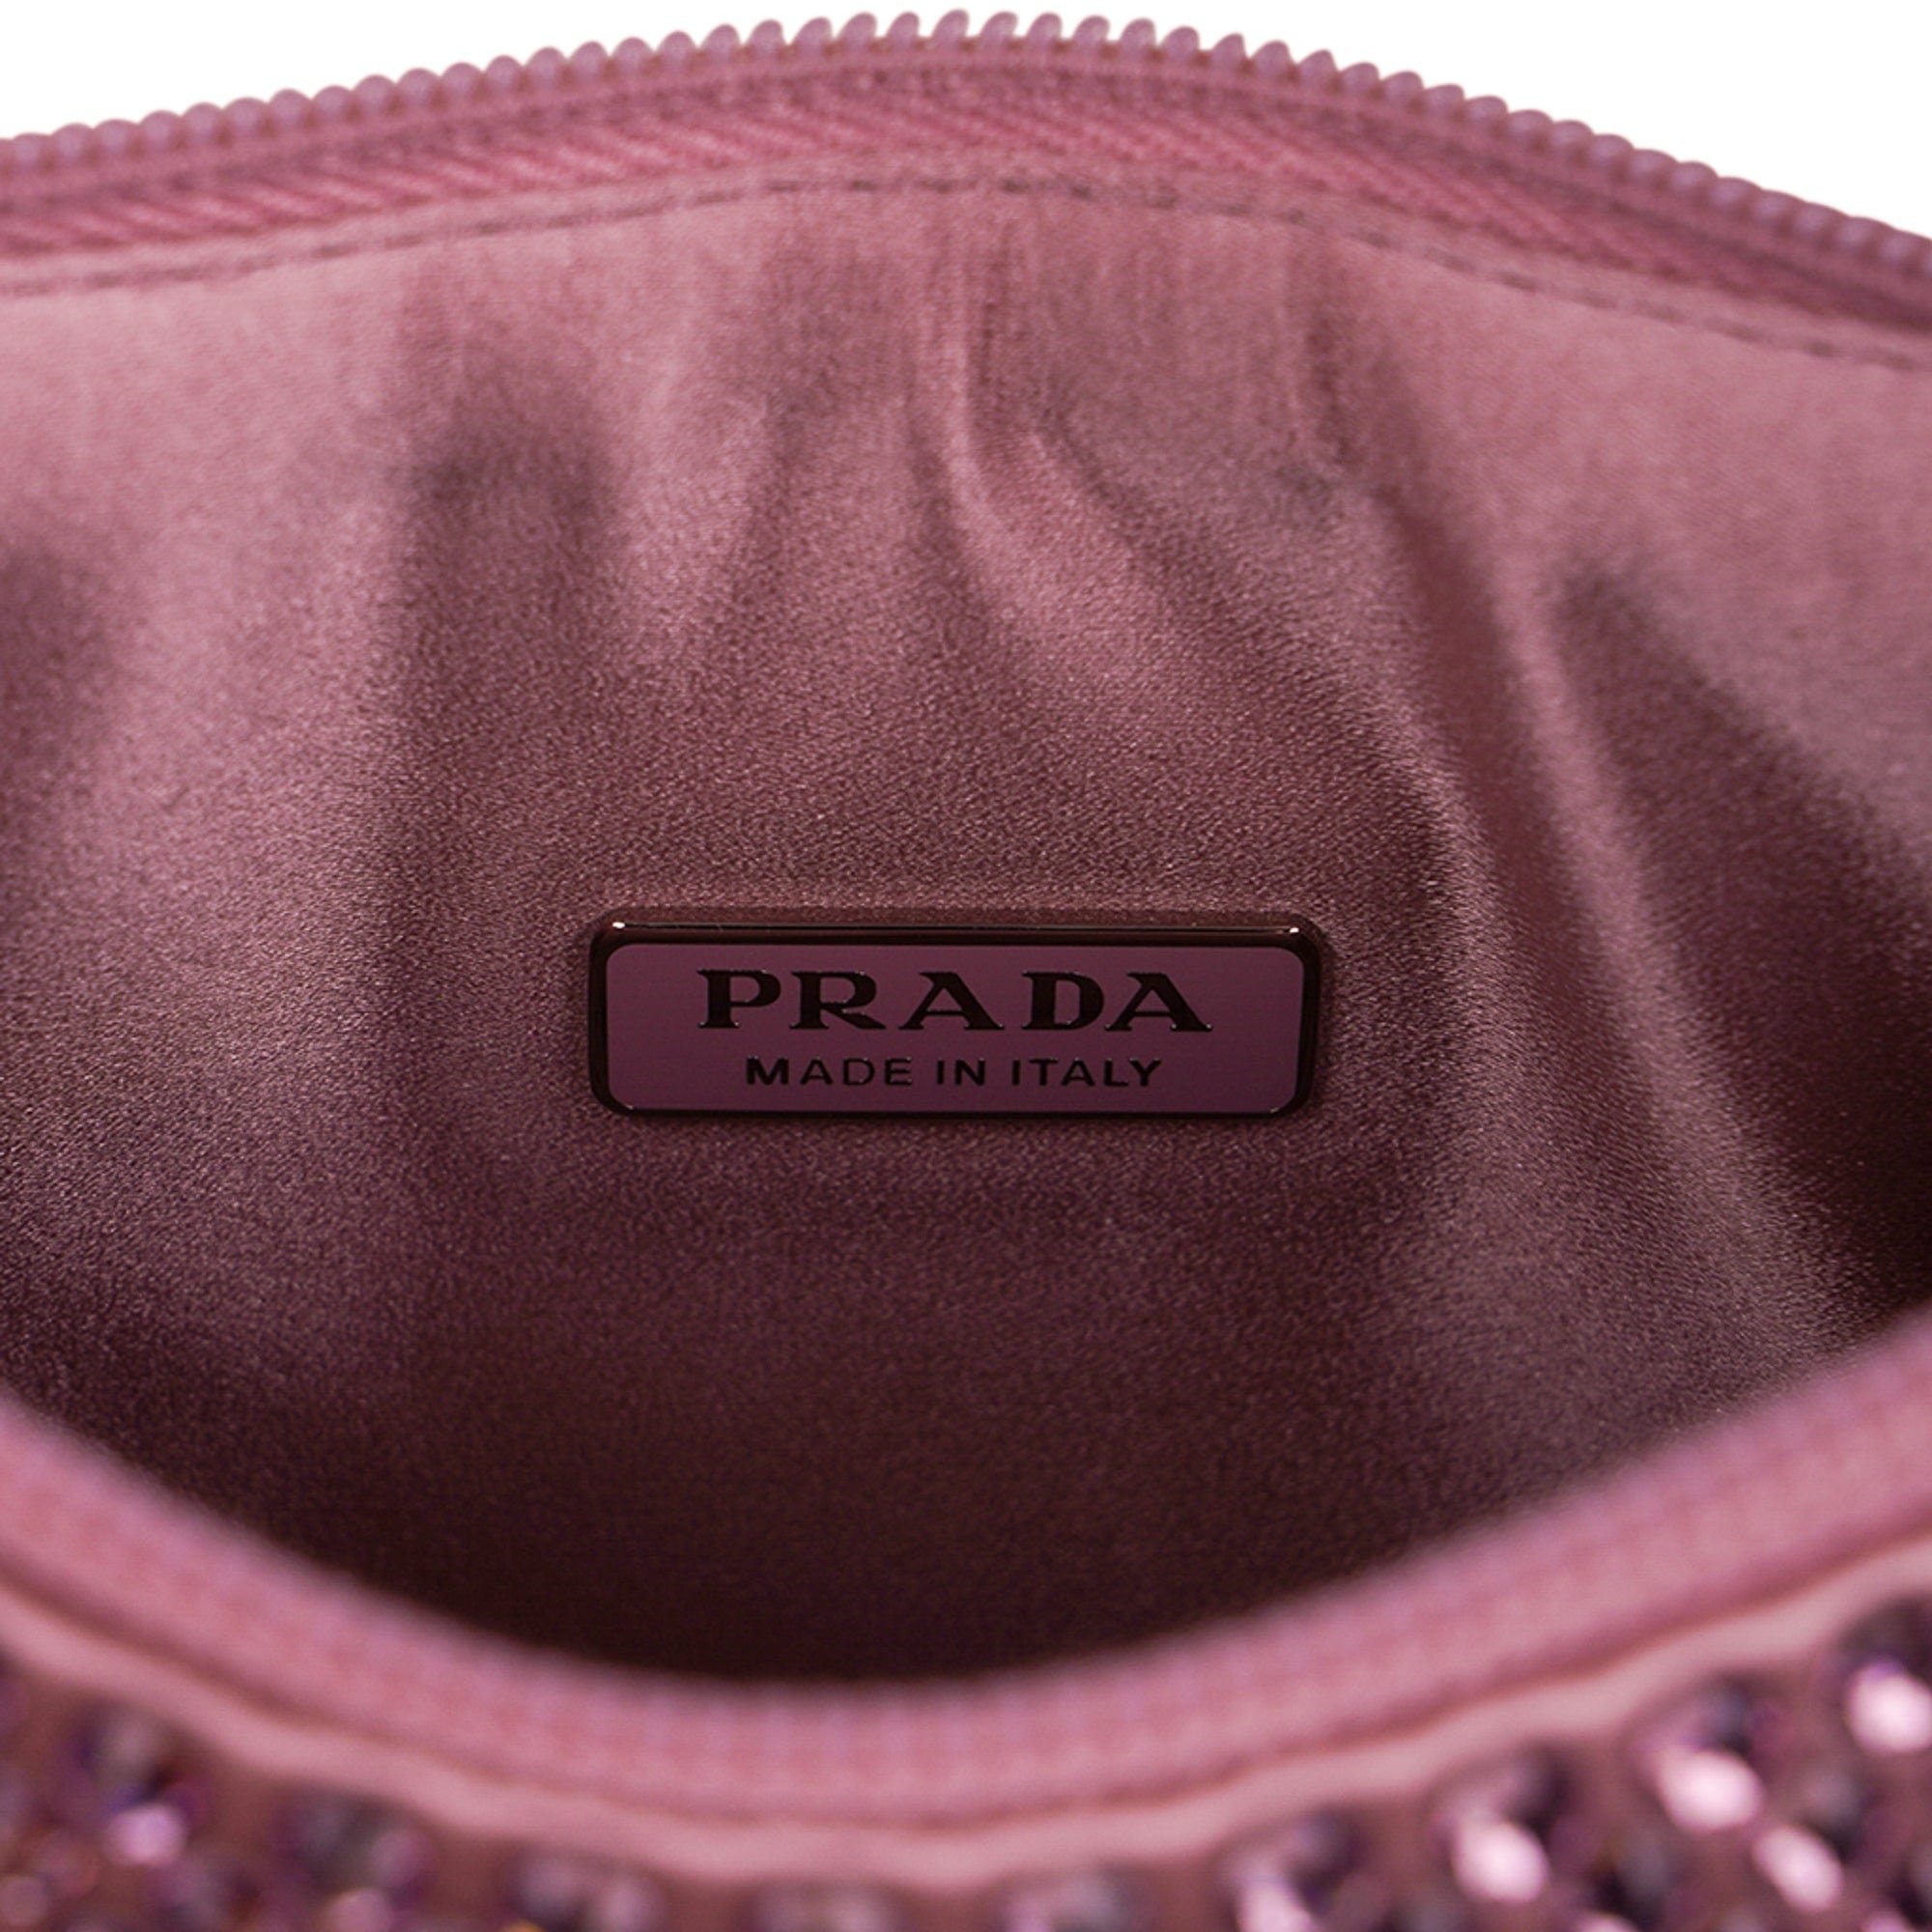 Bags aesthetic, prada crystal bag, pink shoulder bag, prada reedition, loro  piana babouche